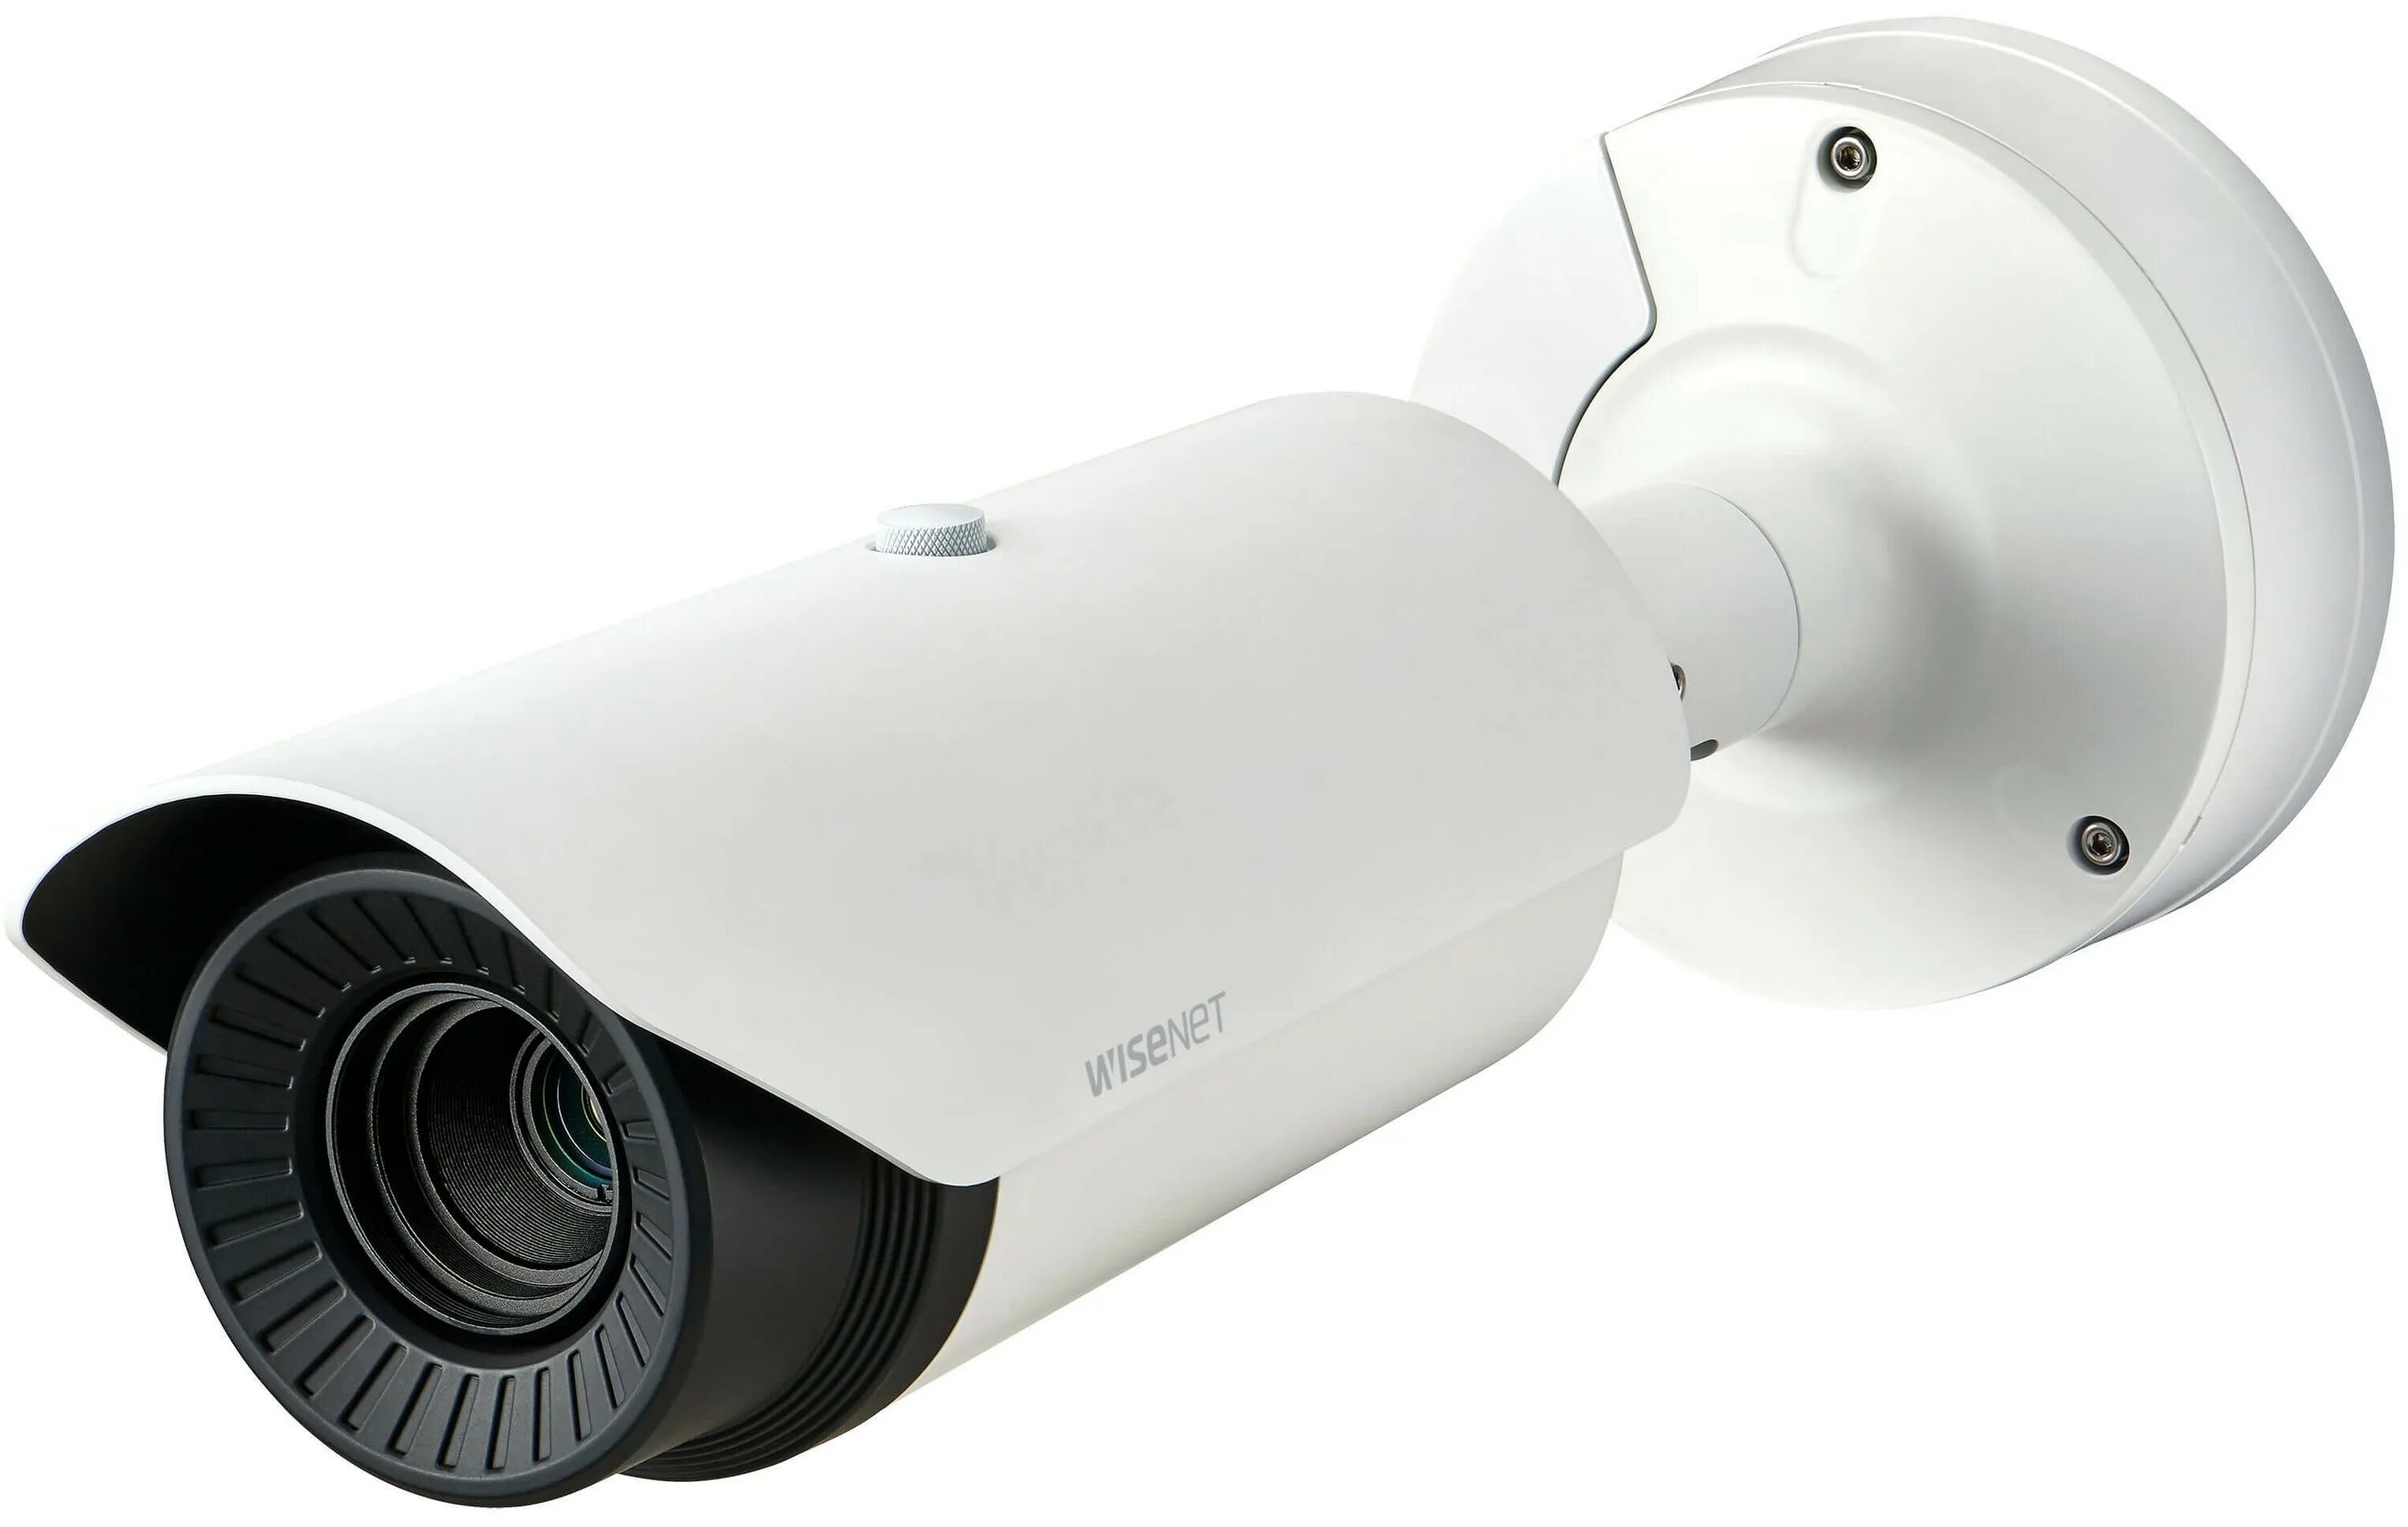 Уличные камеры poe. Видеокамера TNO-3010t. Камера Hanwha (WISENET) PNM-9002 VQ. Я IP-камера WISENET t2480. Samsung PNM-9084qz WISENET.